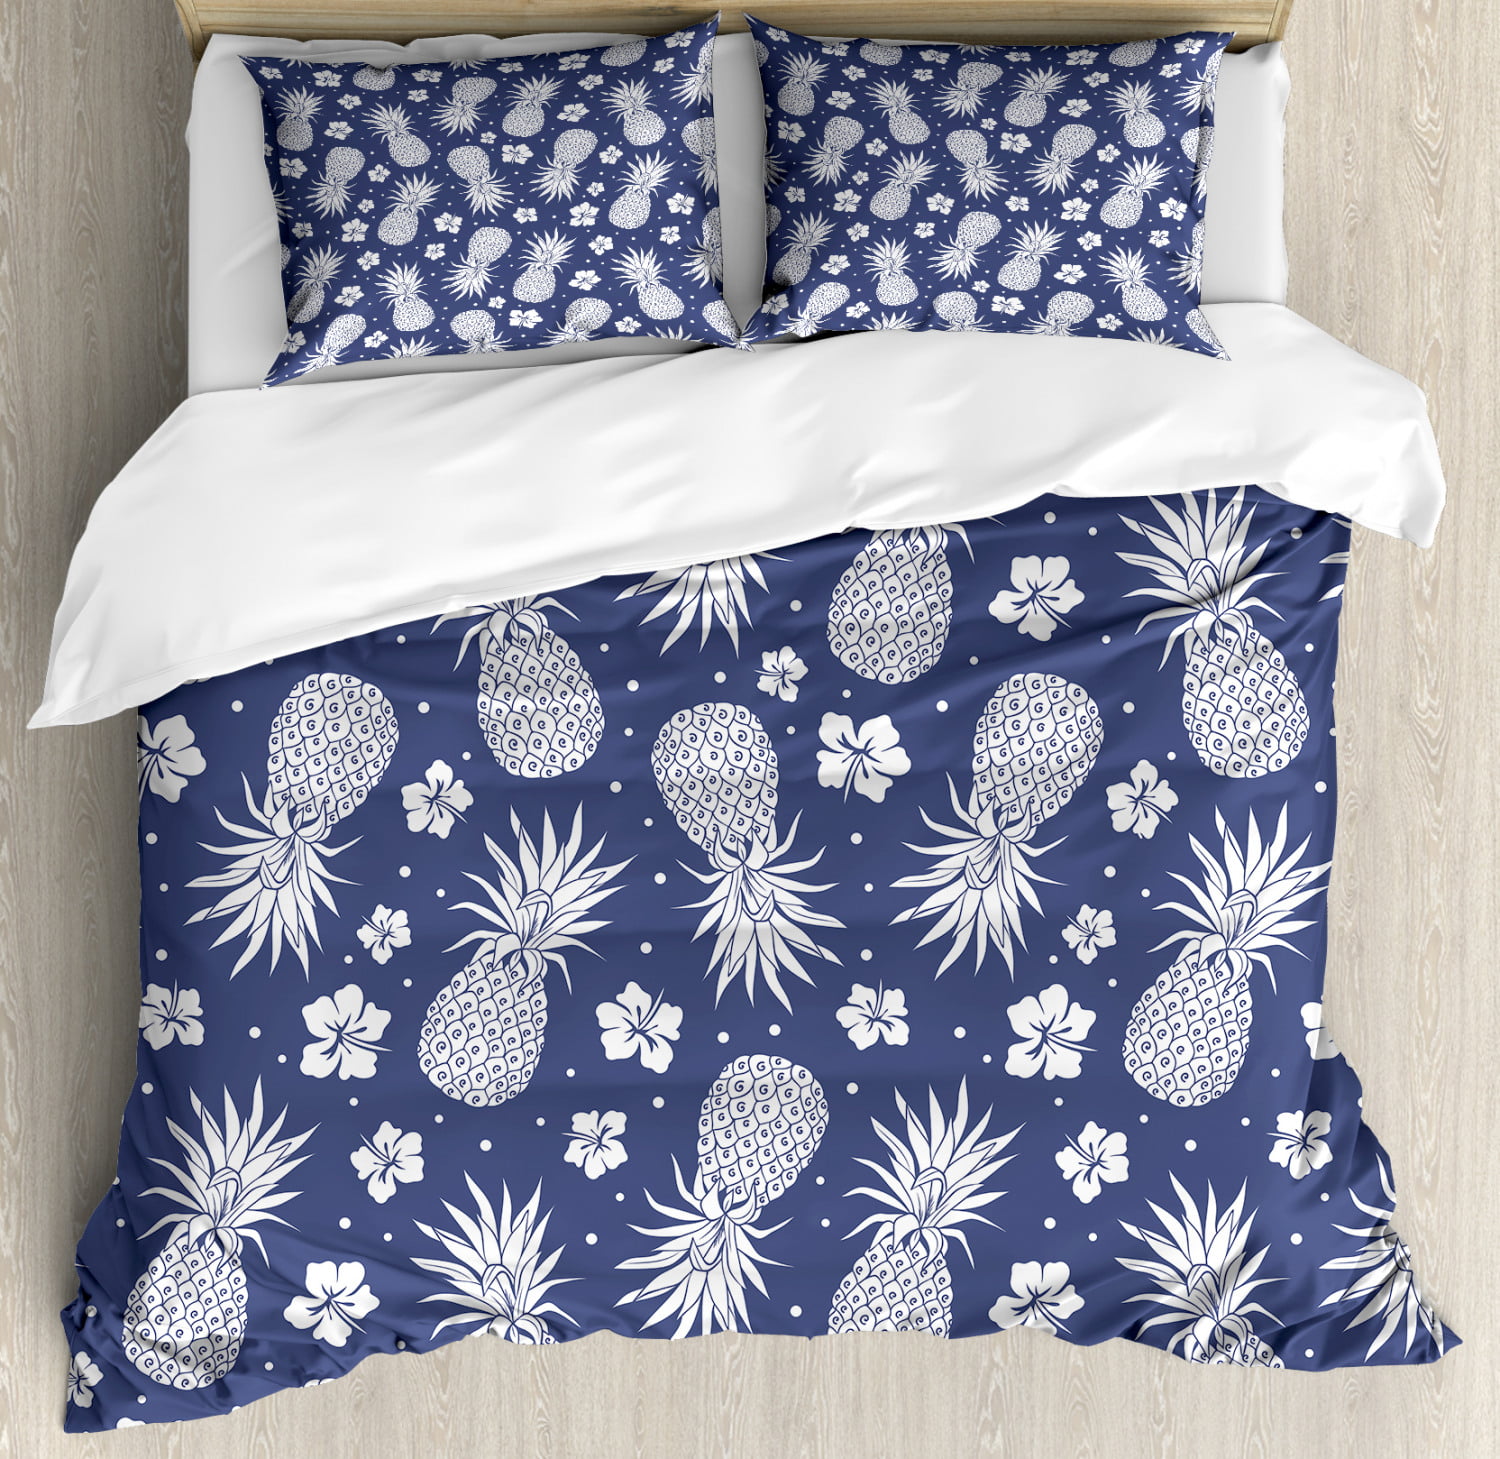 Decorative 3 Piece Bedding Set, Holiday Botanical Duvet Cover